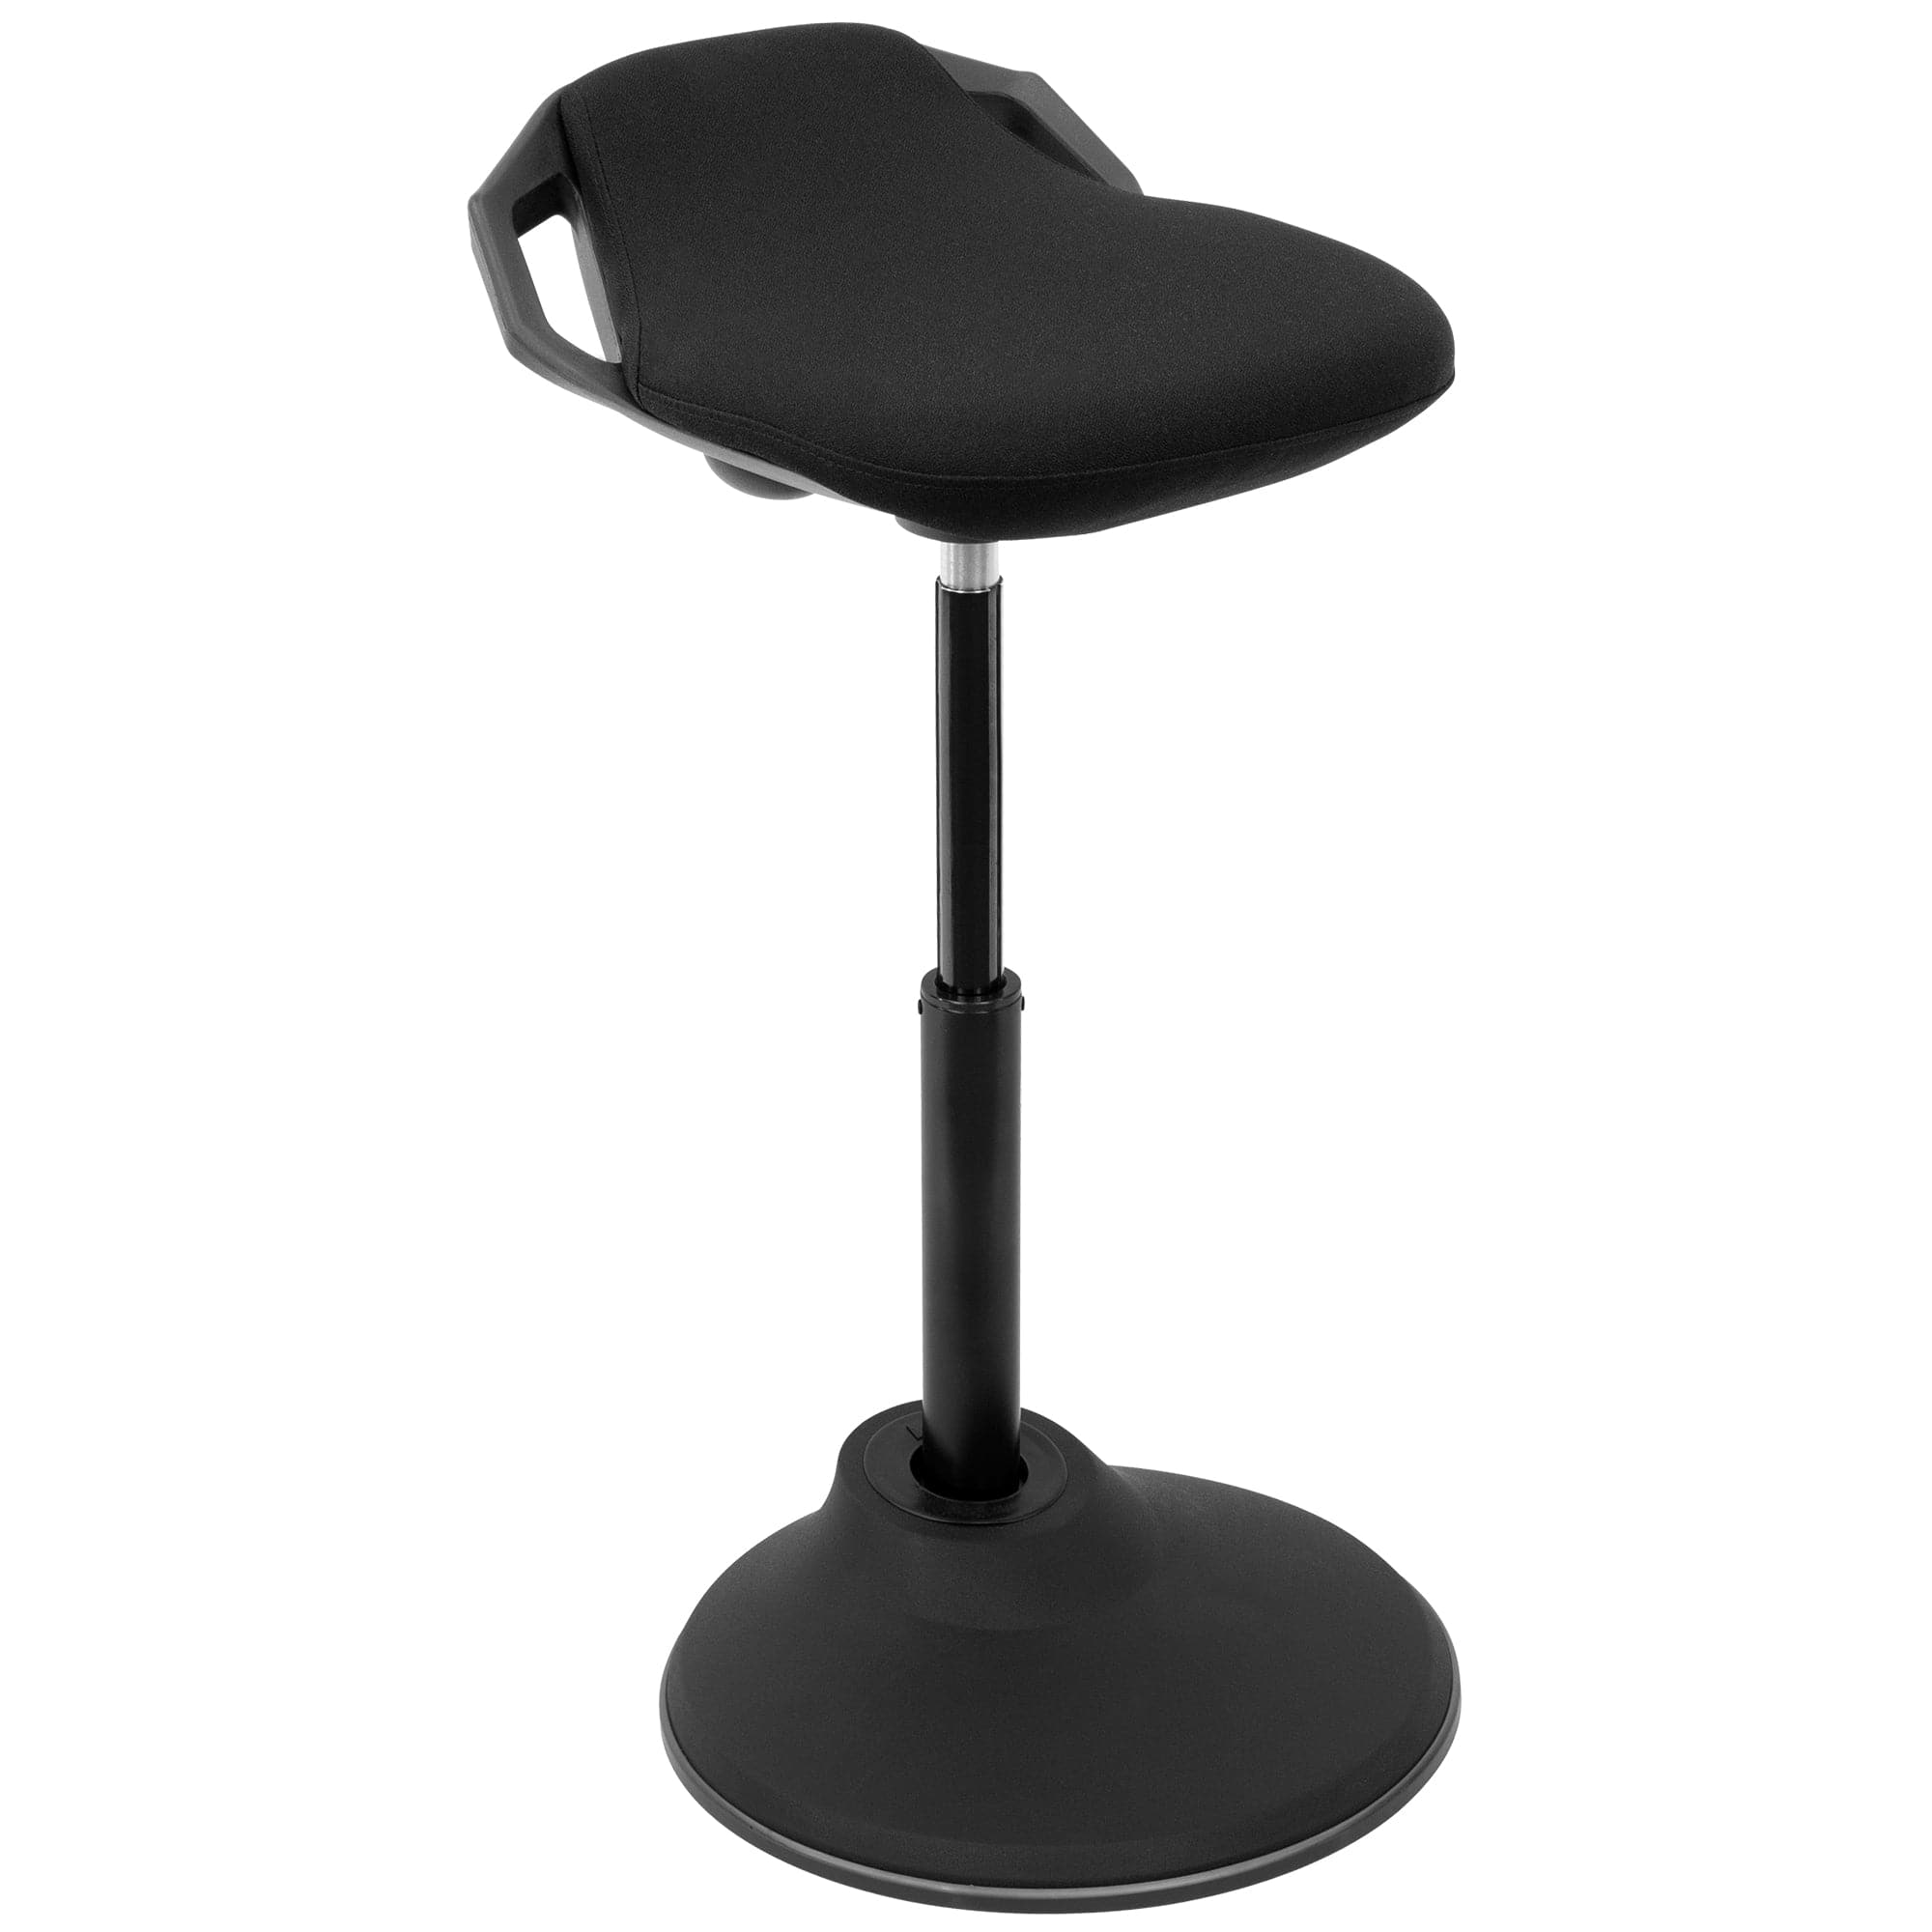 https://cdn.shopify.com/s/files/1/0051/3674/4566/products/ergonomic-sit-stand-stool-453670.jpg?v=1687282232